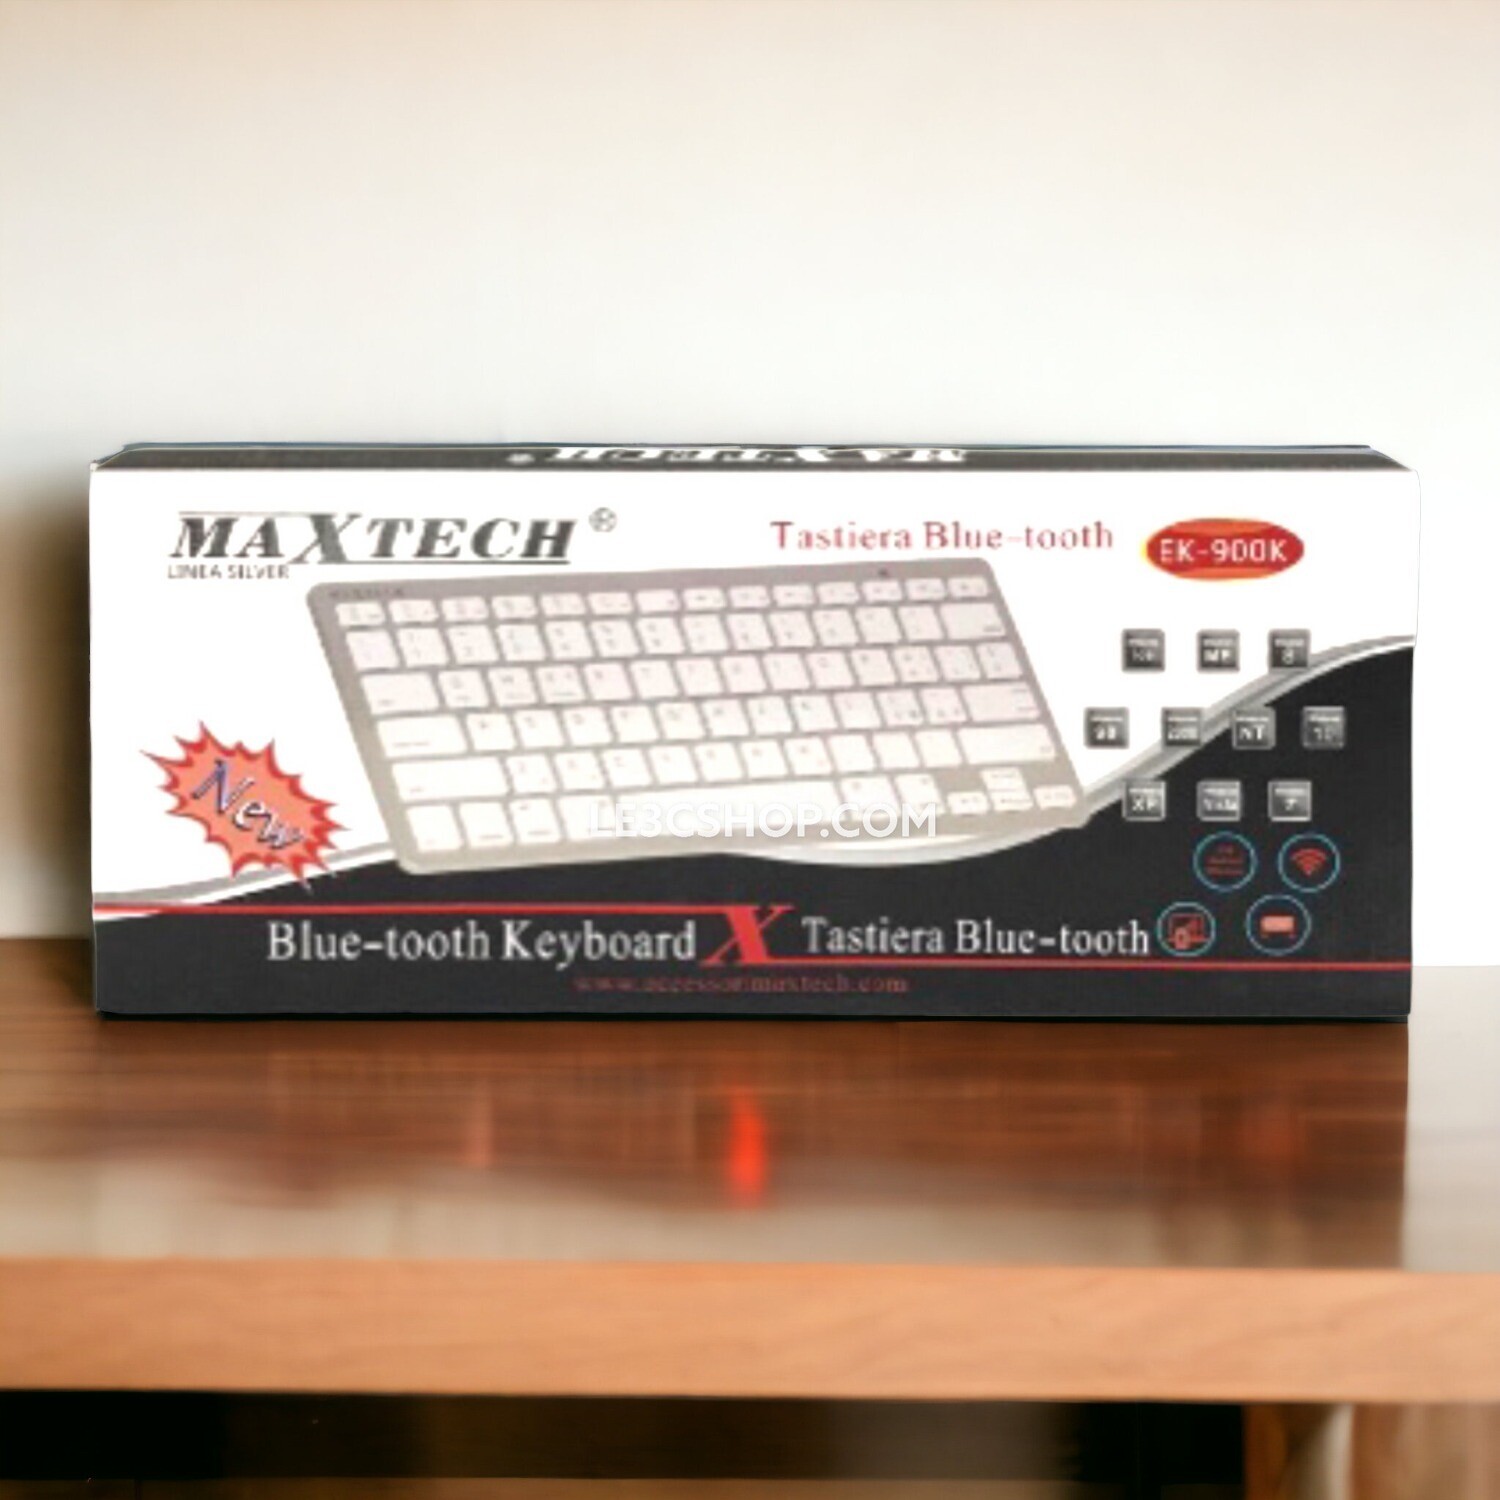 Tastiera Bluetooth Maxtech - Perfetta per Mac e MacBook.